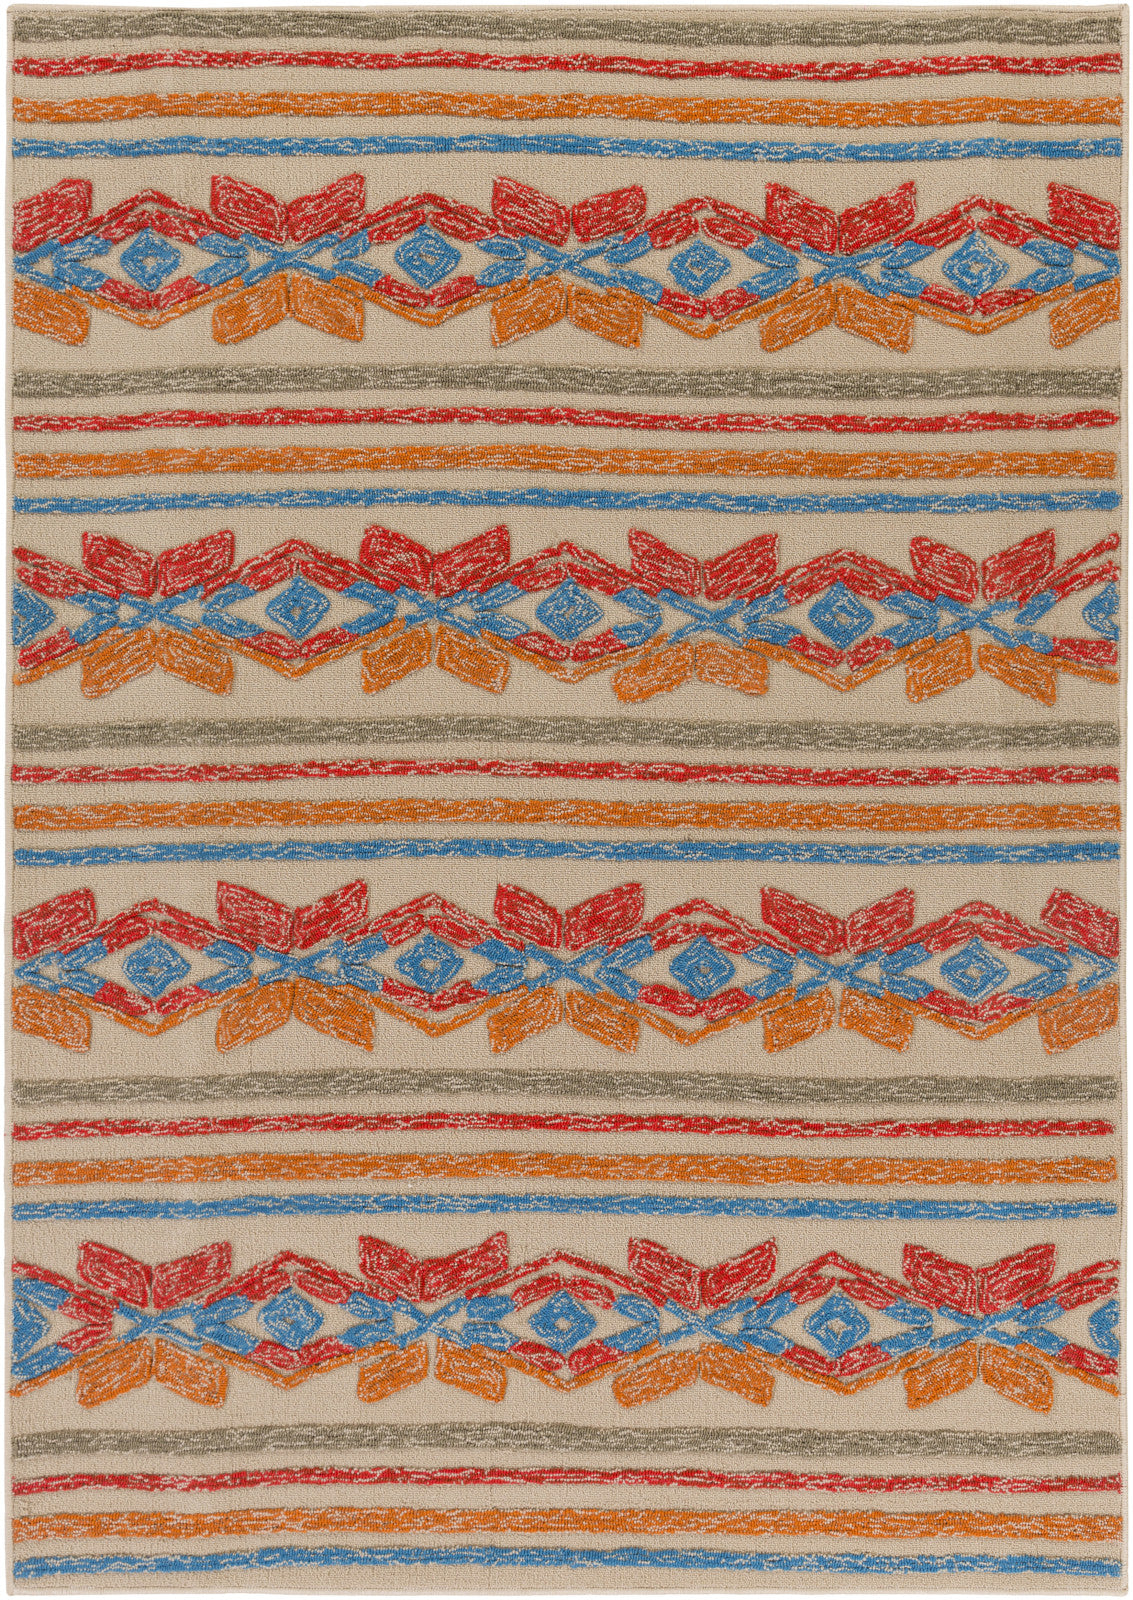 Artistic Weavers Mayan Star Poppy Red/Tangerine Area Rug main image